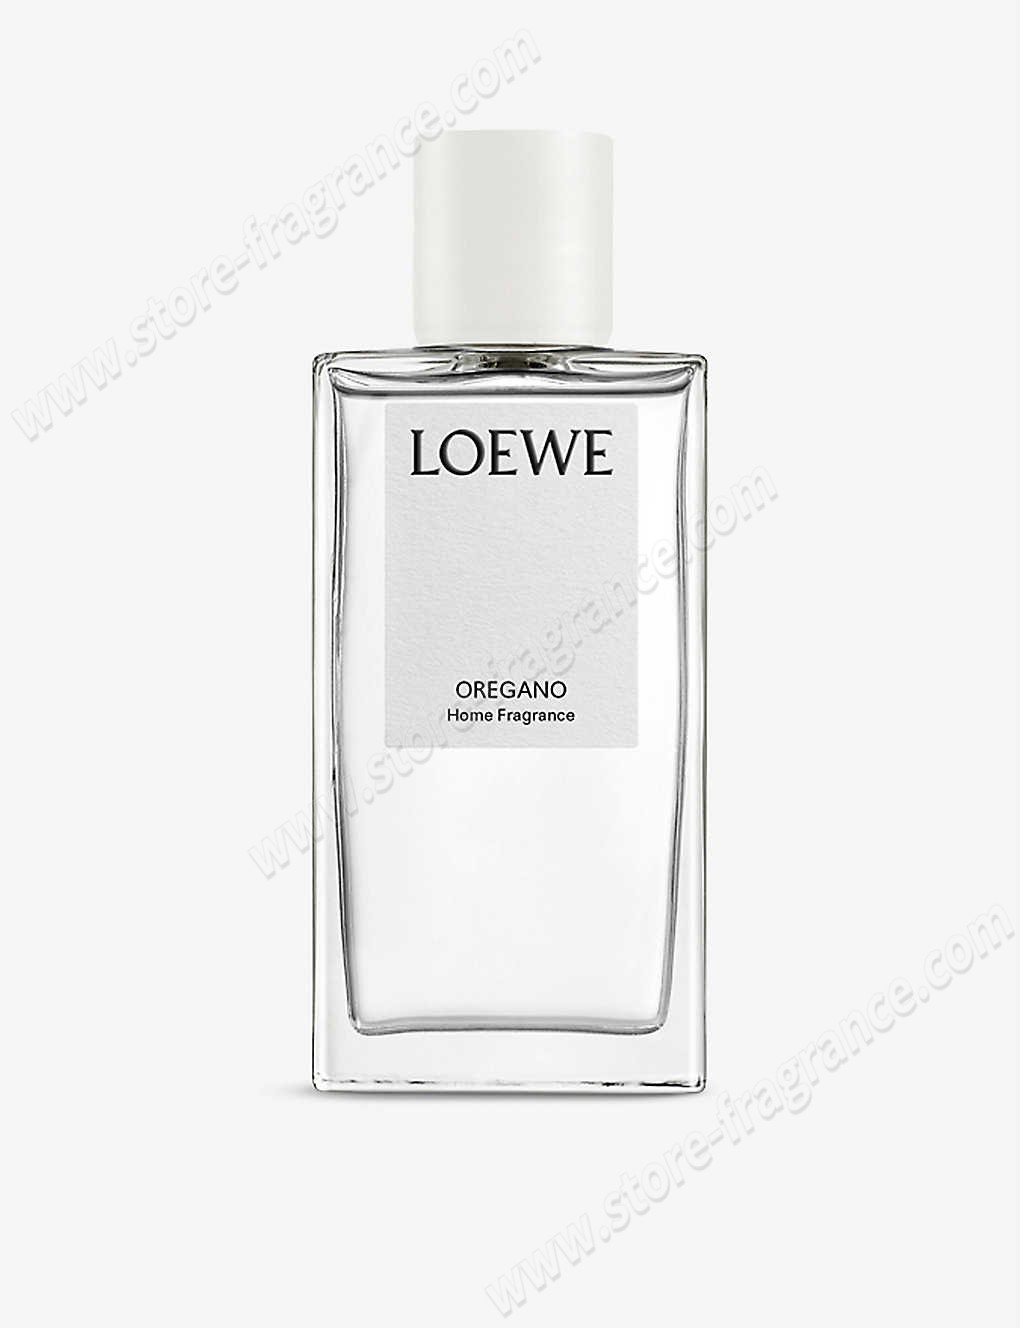 LOEWE/Oregano room spray 150ml ✿ Discount Store - LOEWE/Oregano room spray 150ml ✿ Discount Store